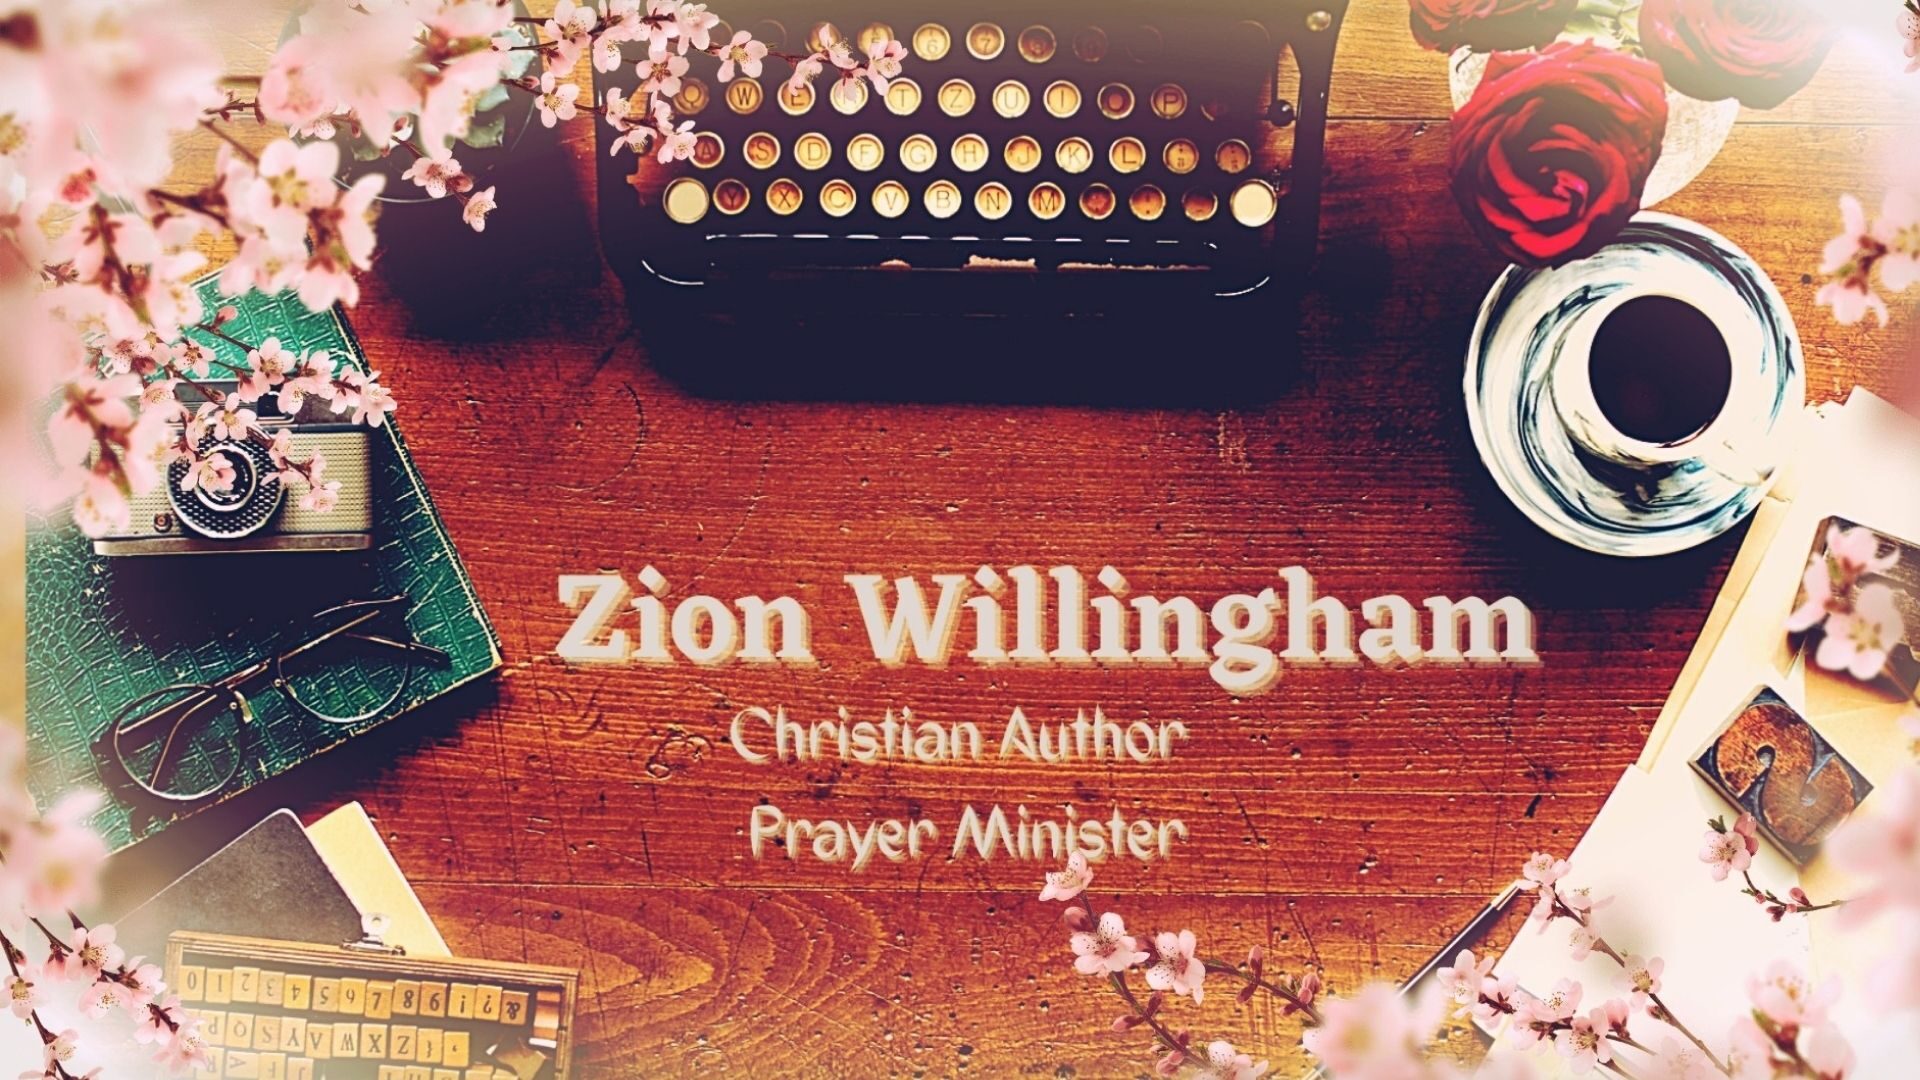 Prophetess Zion Willingham